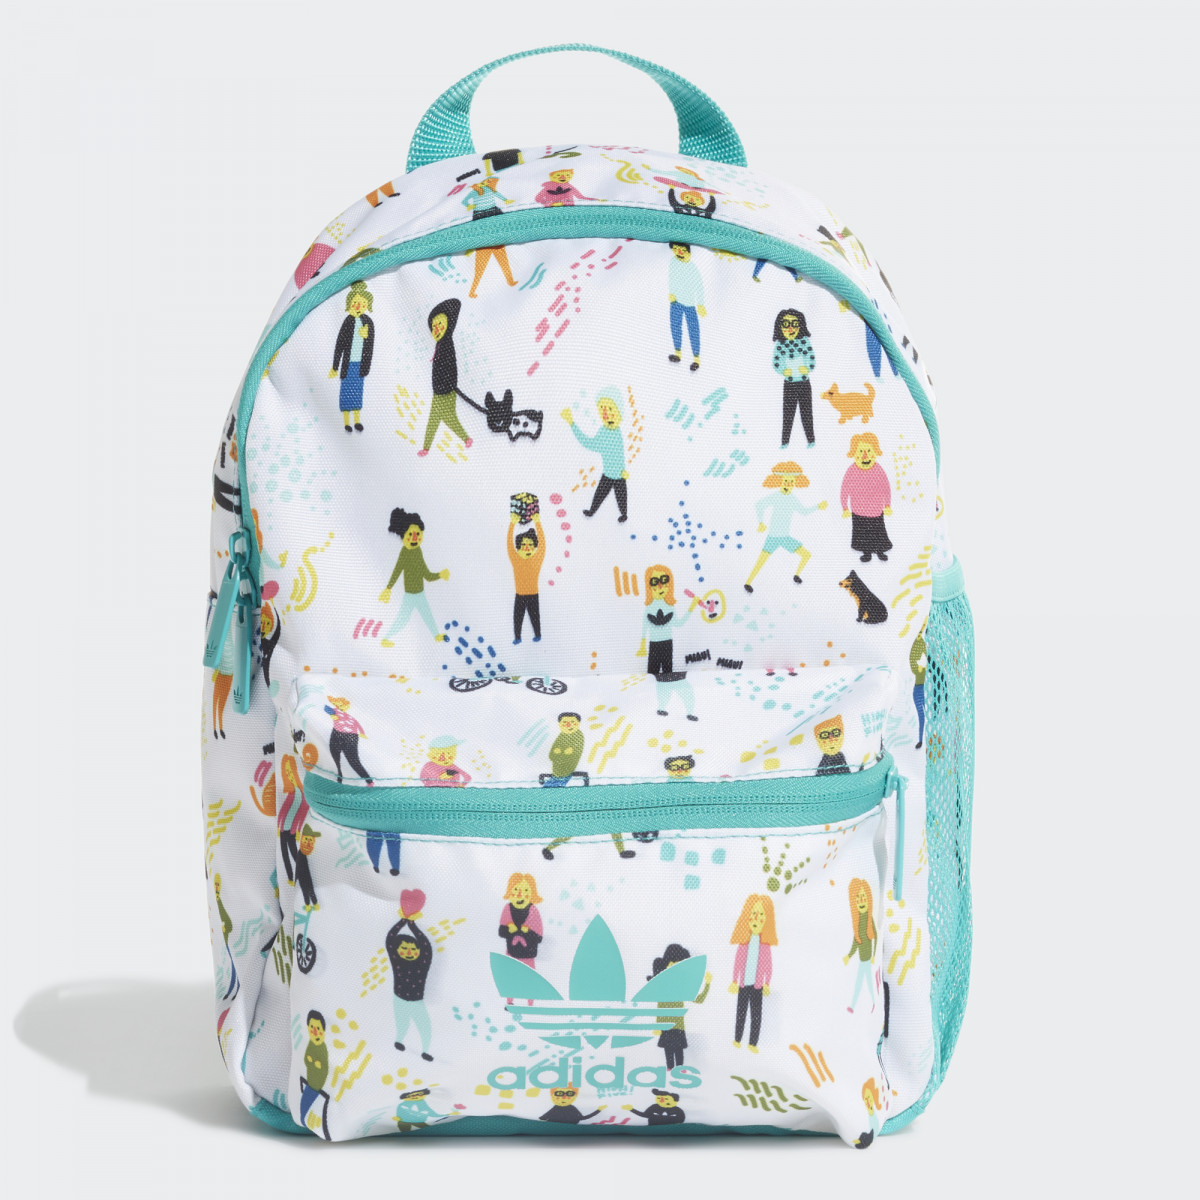 Adidas Kids Originals Backpack